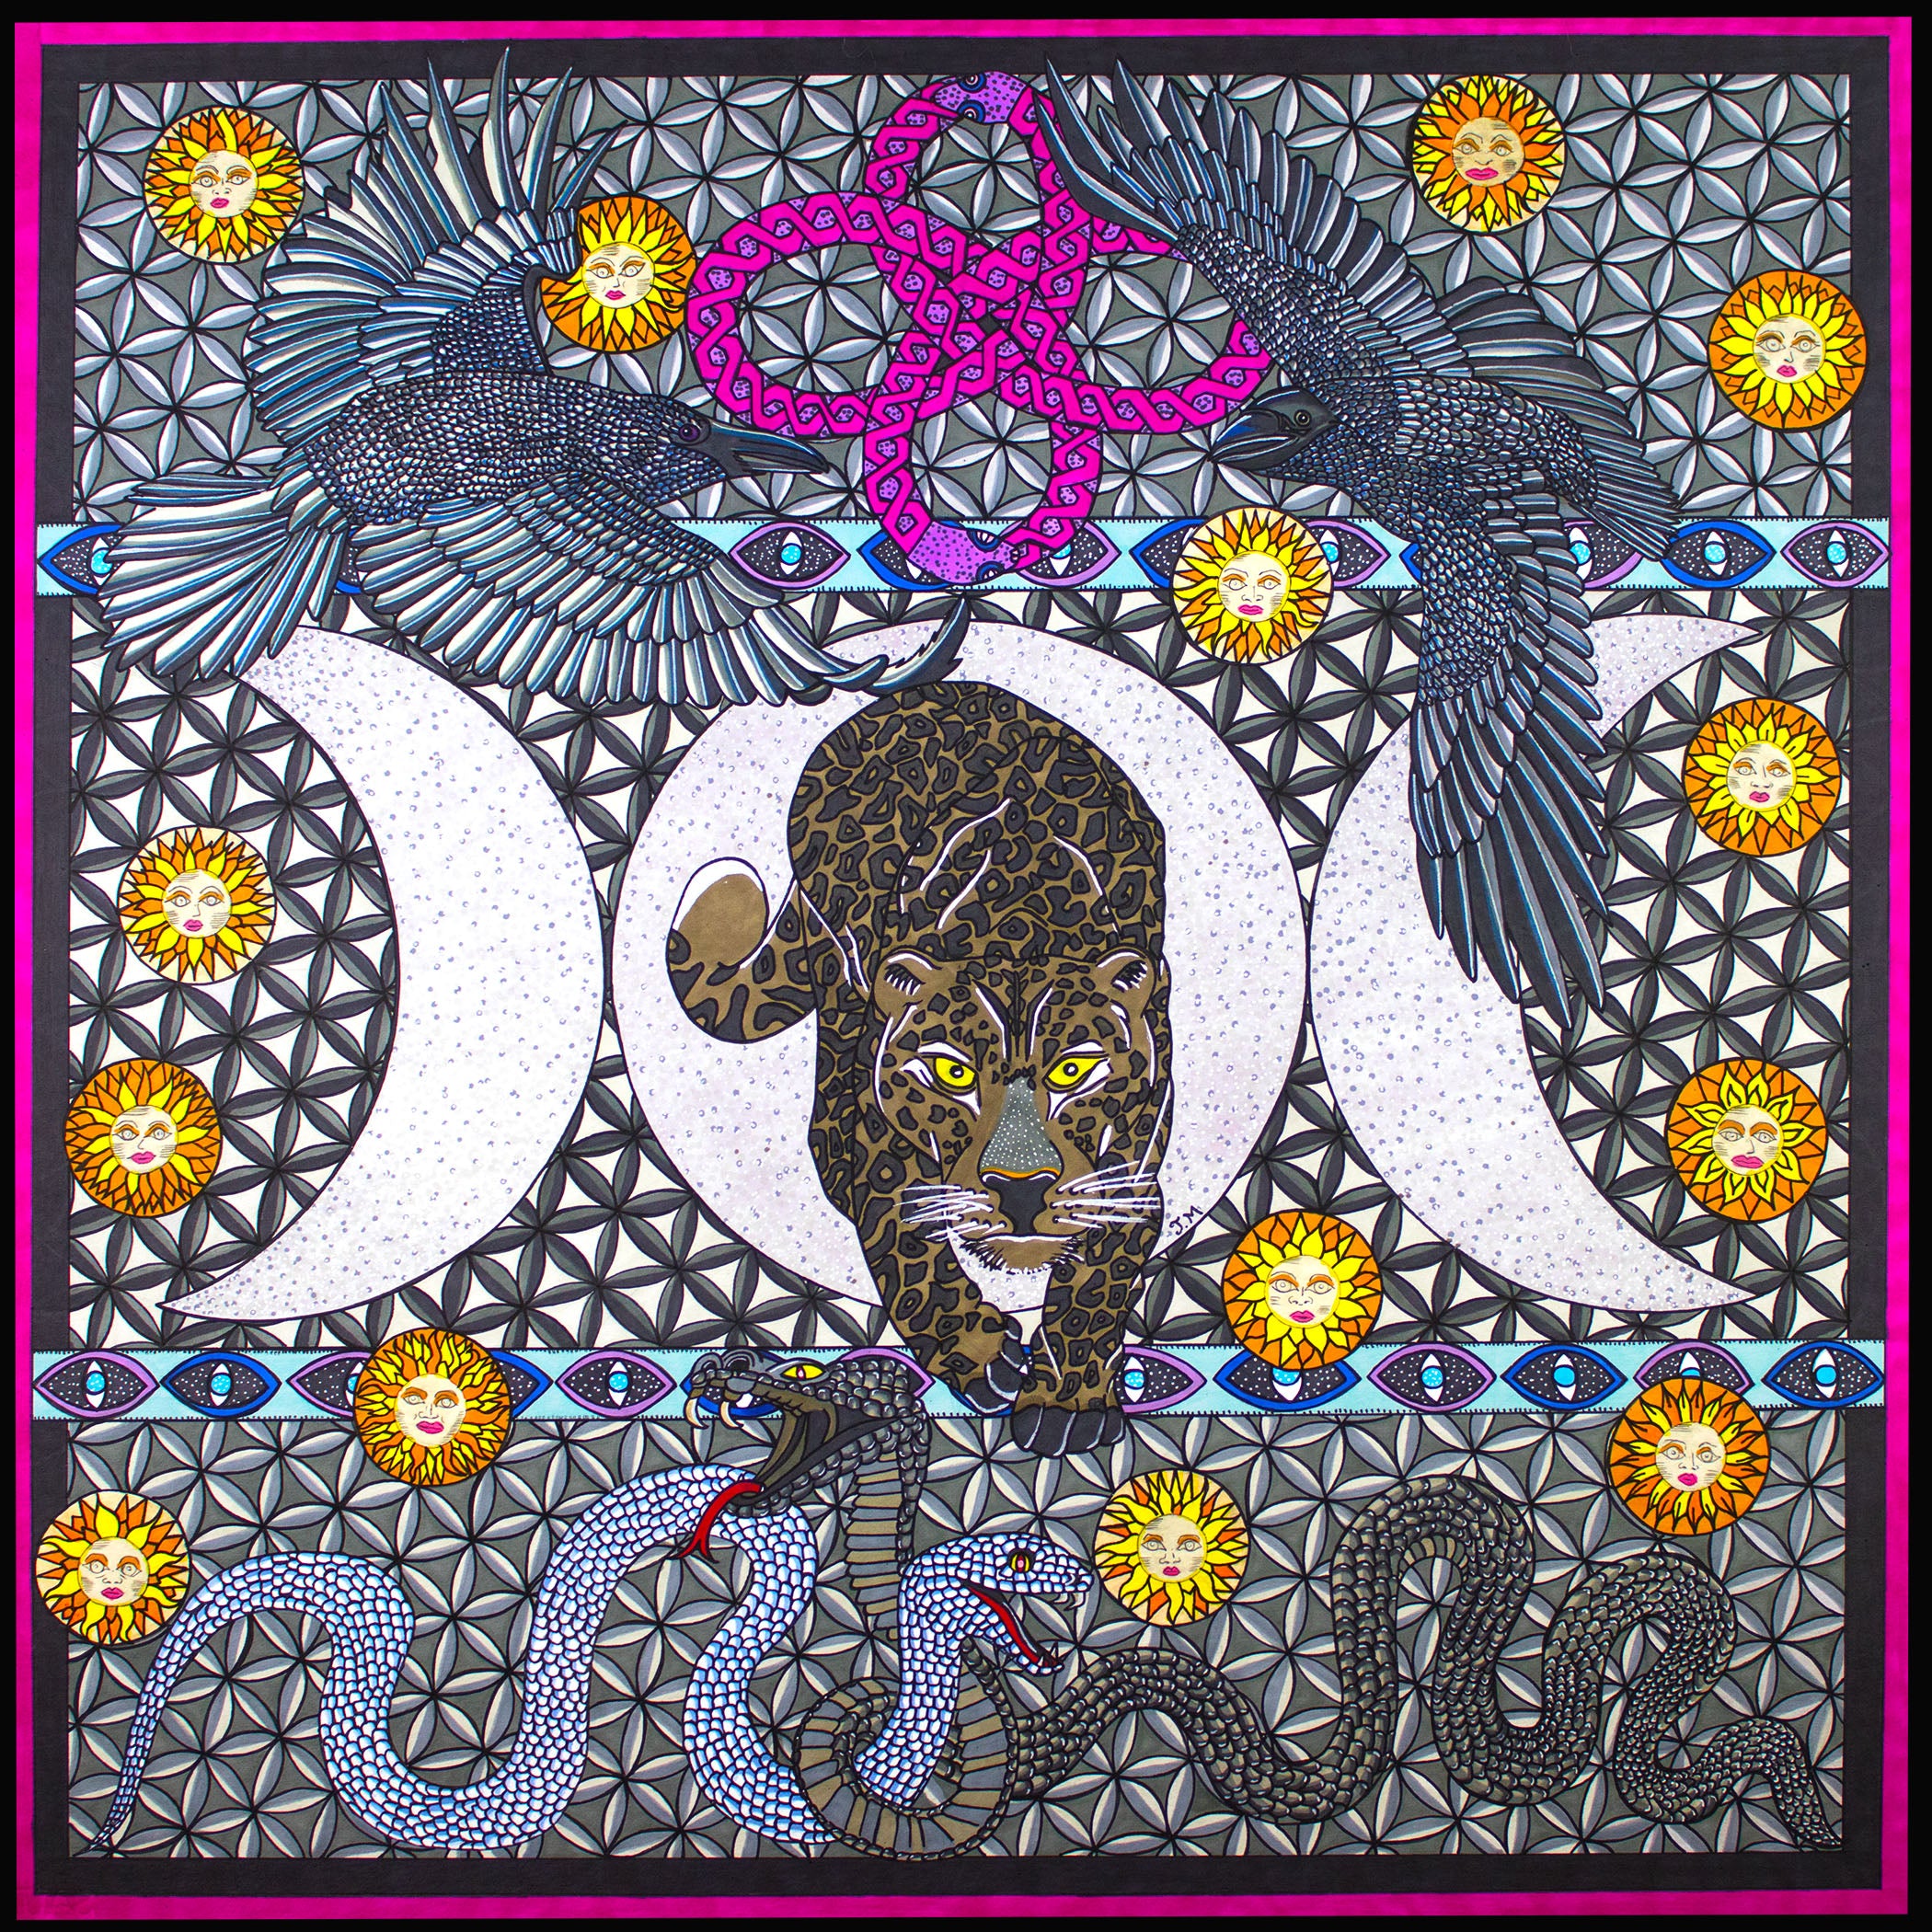 The Jaguar Goddess Moons